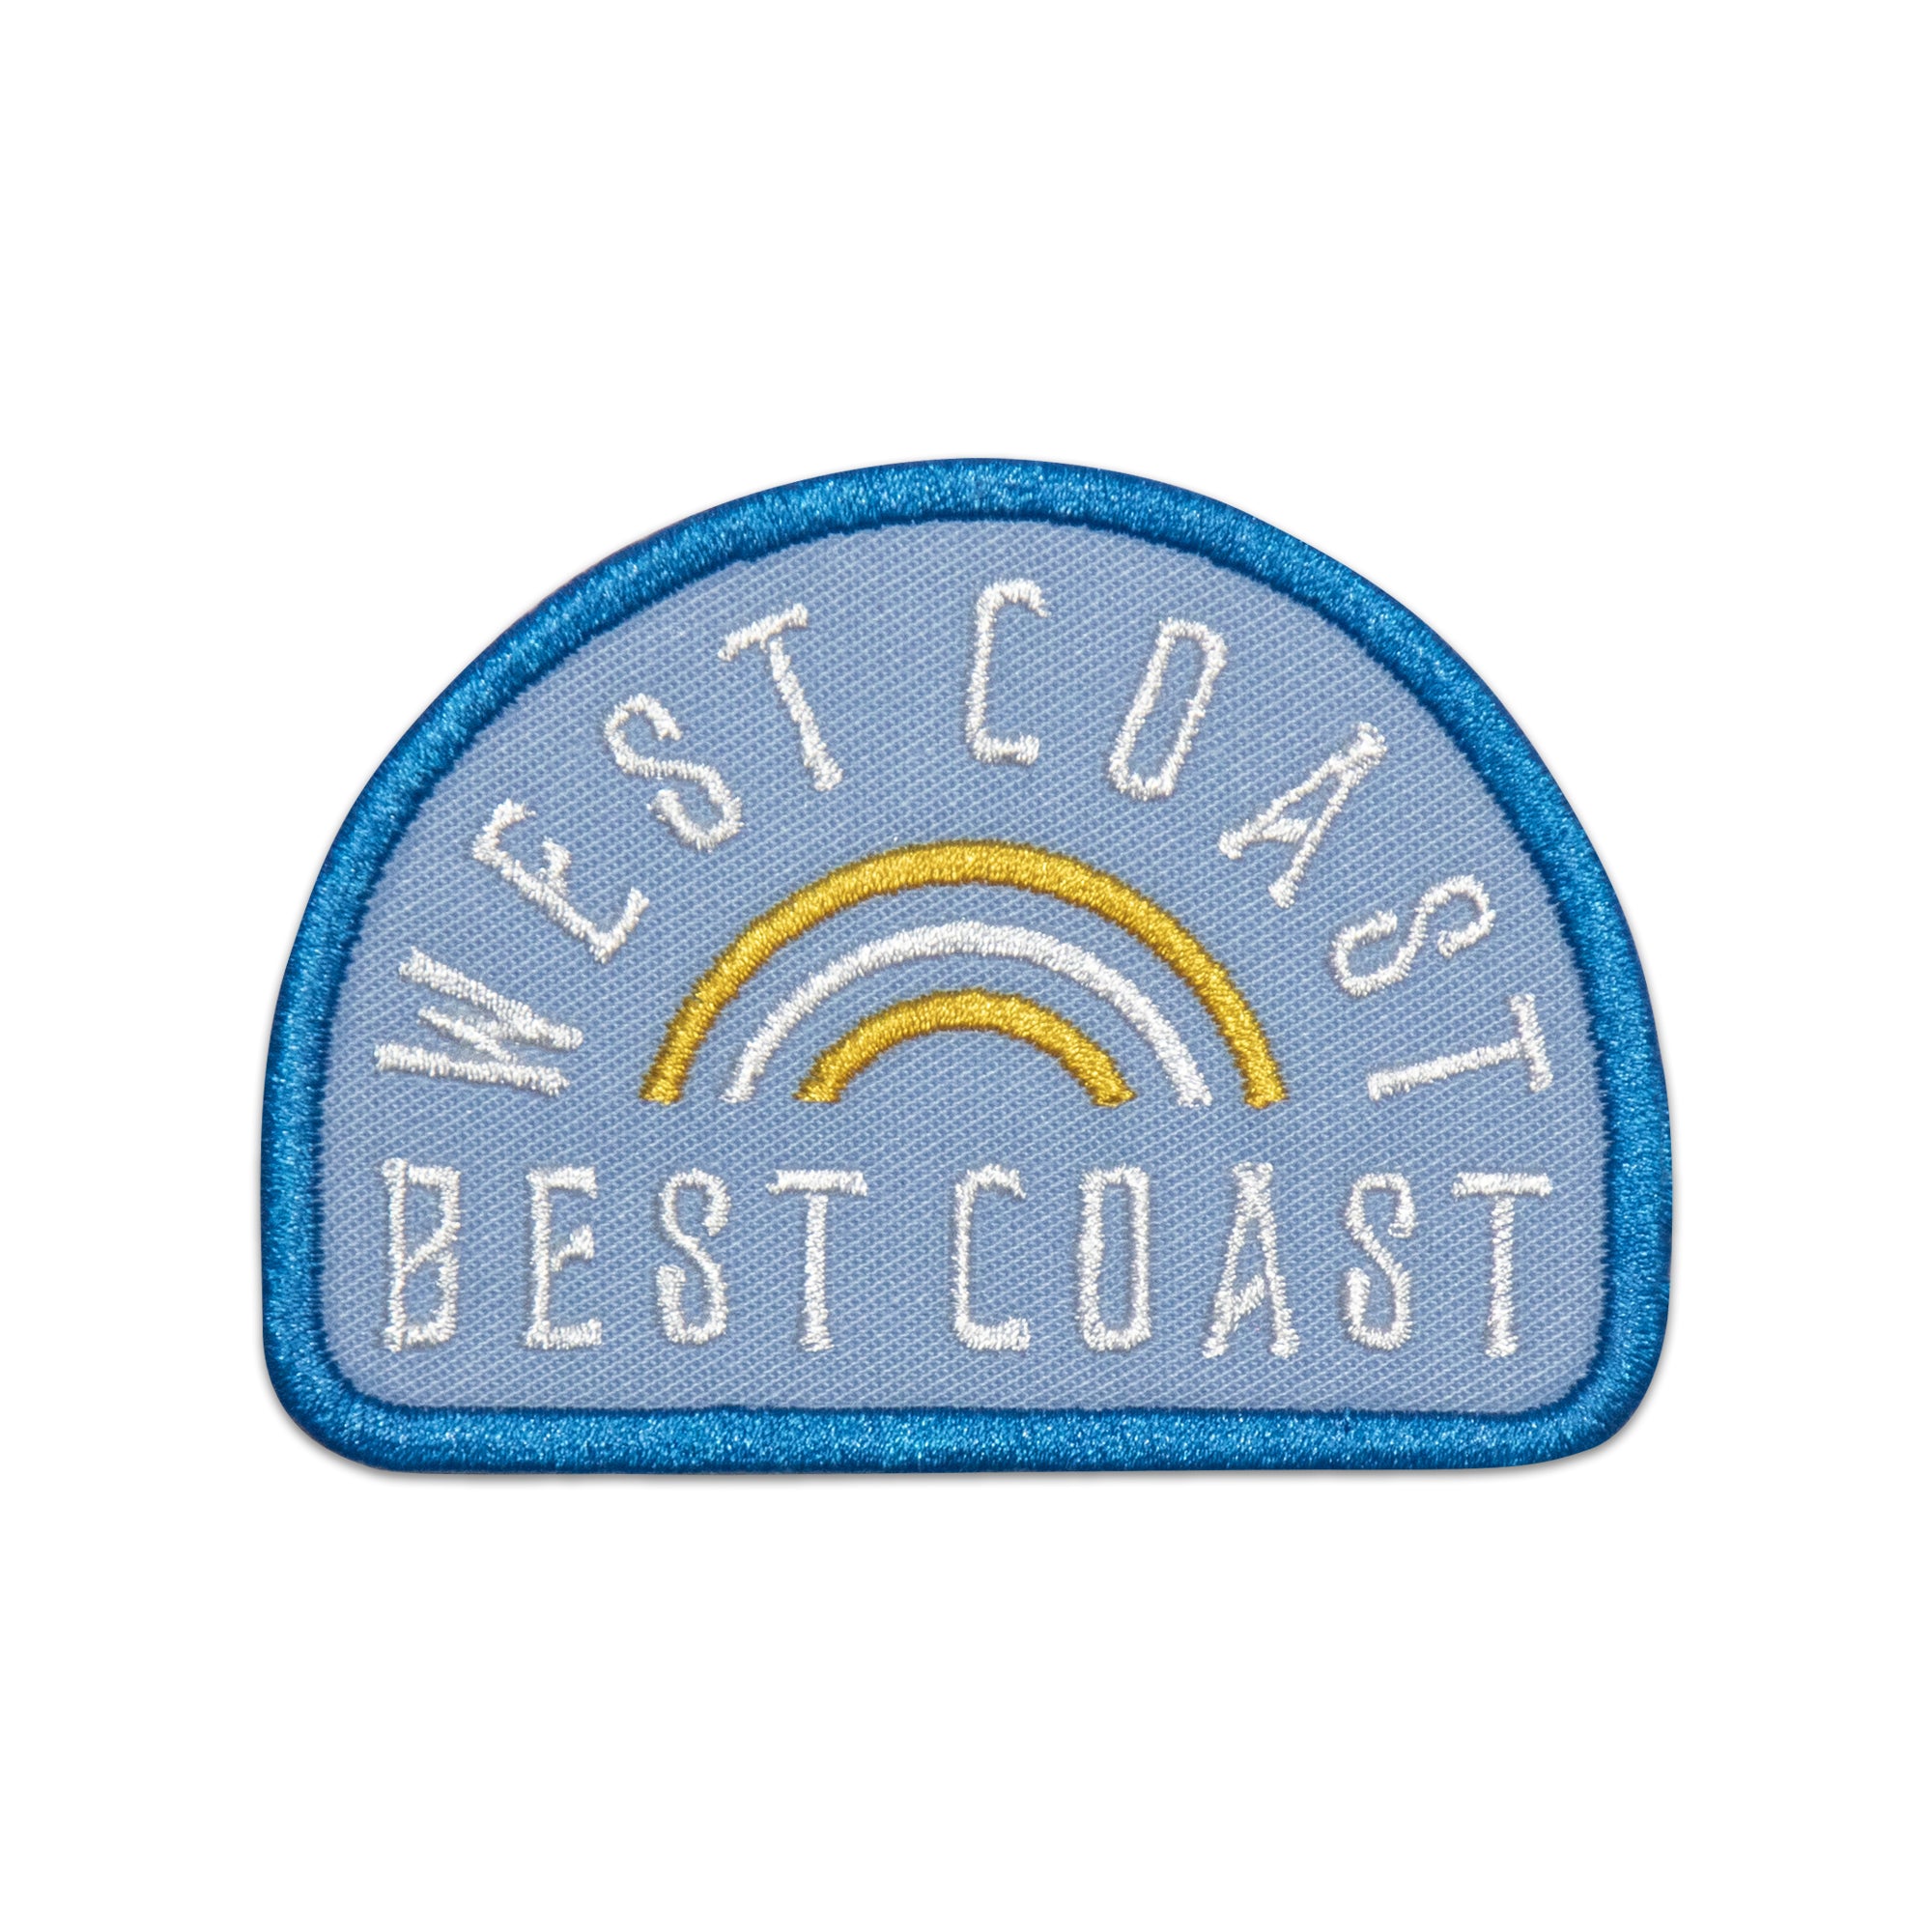 Best Coast Patch